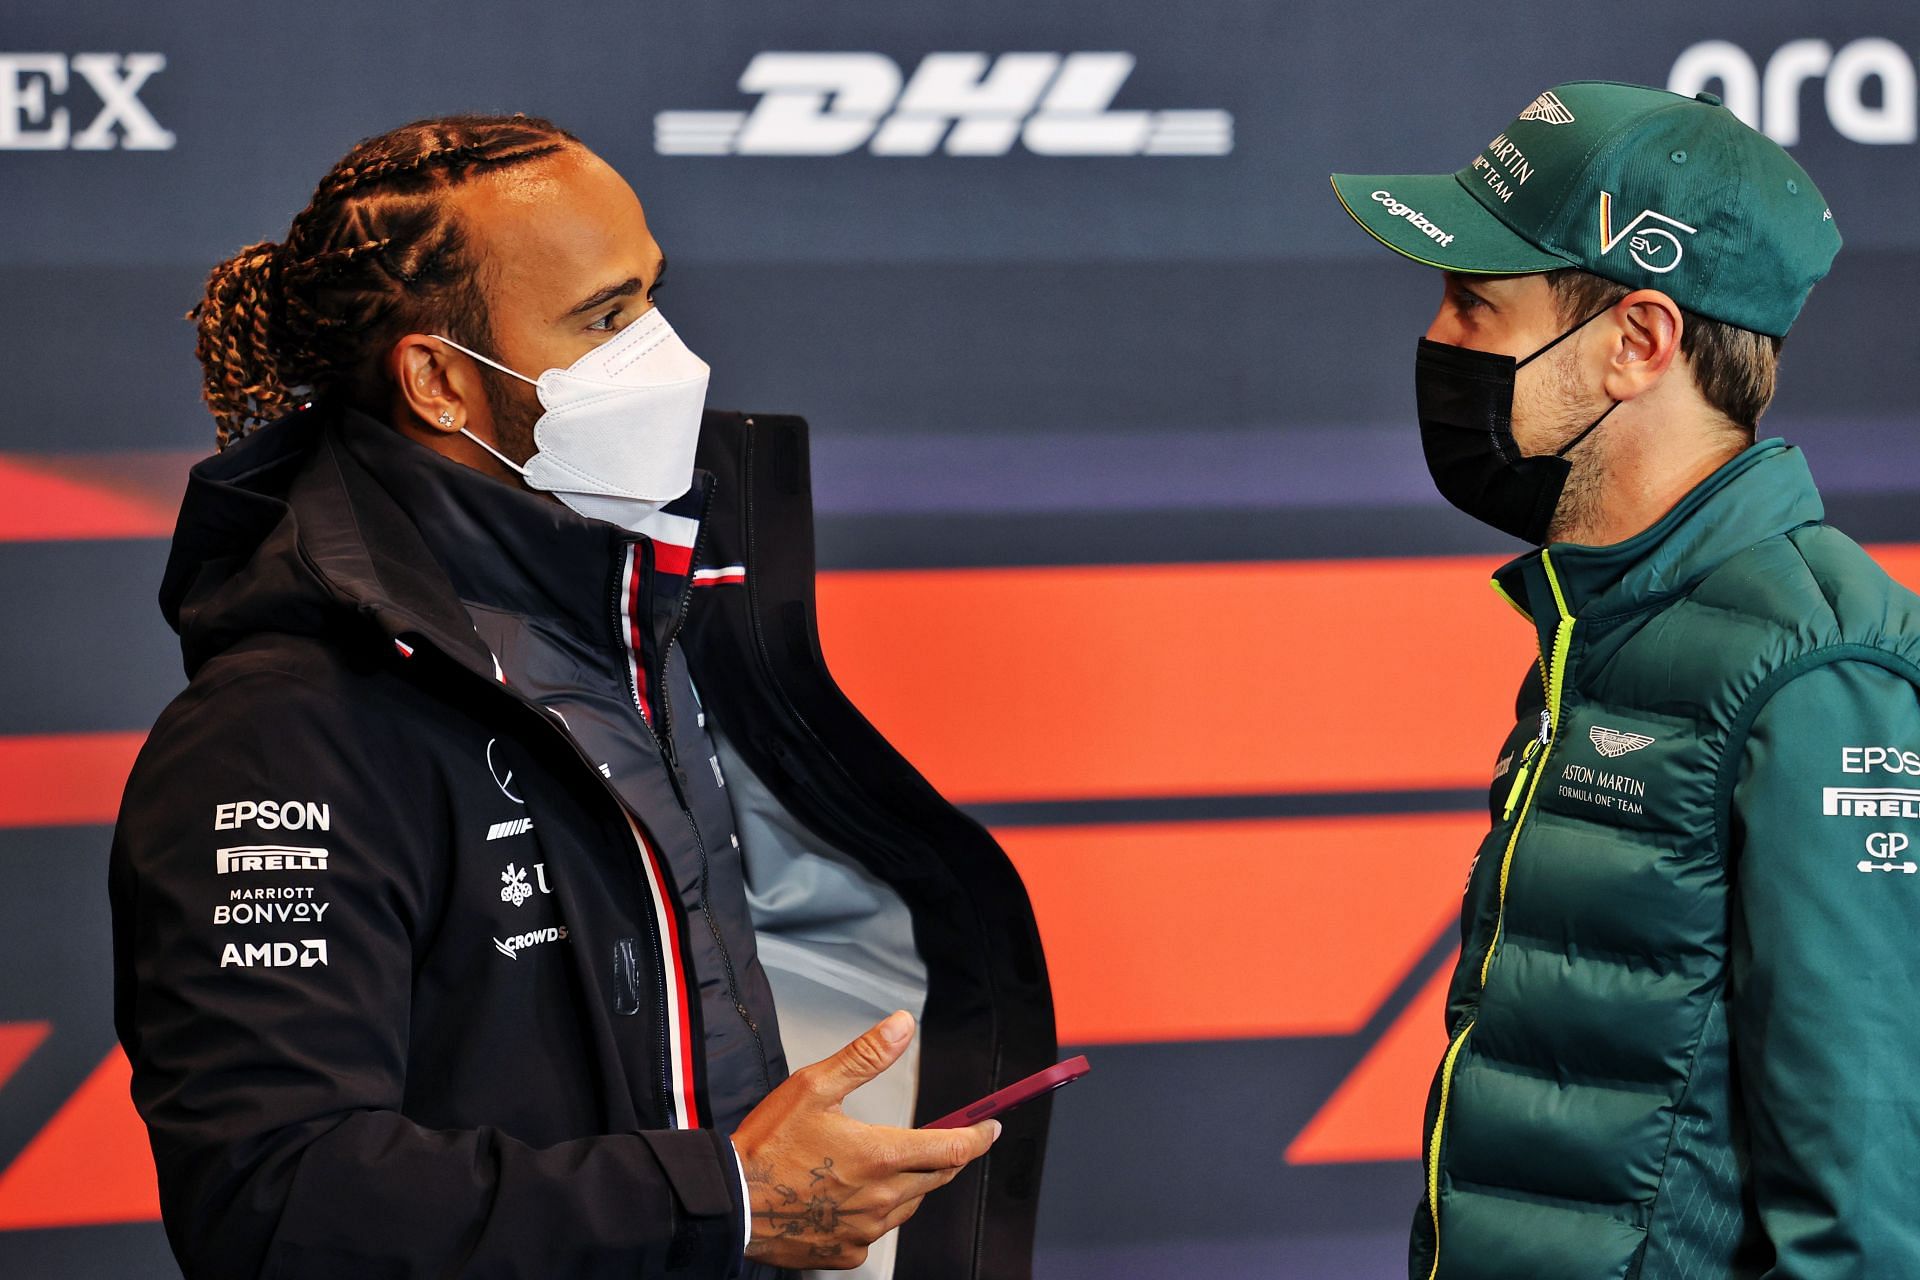 F1 Grand Prix of Emilia Romagna - Lewis Hamilton (left) and Sebastian Vettel (right) talk in Imola